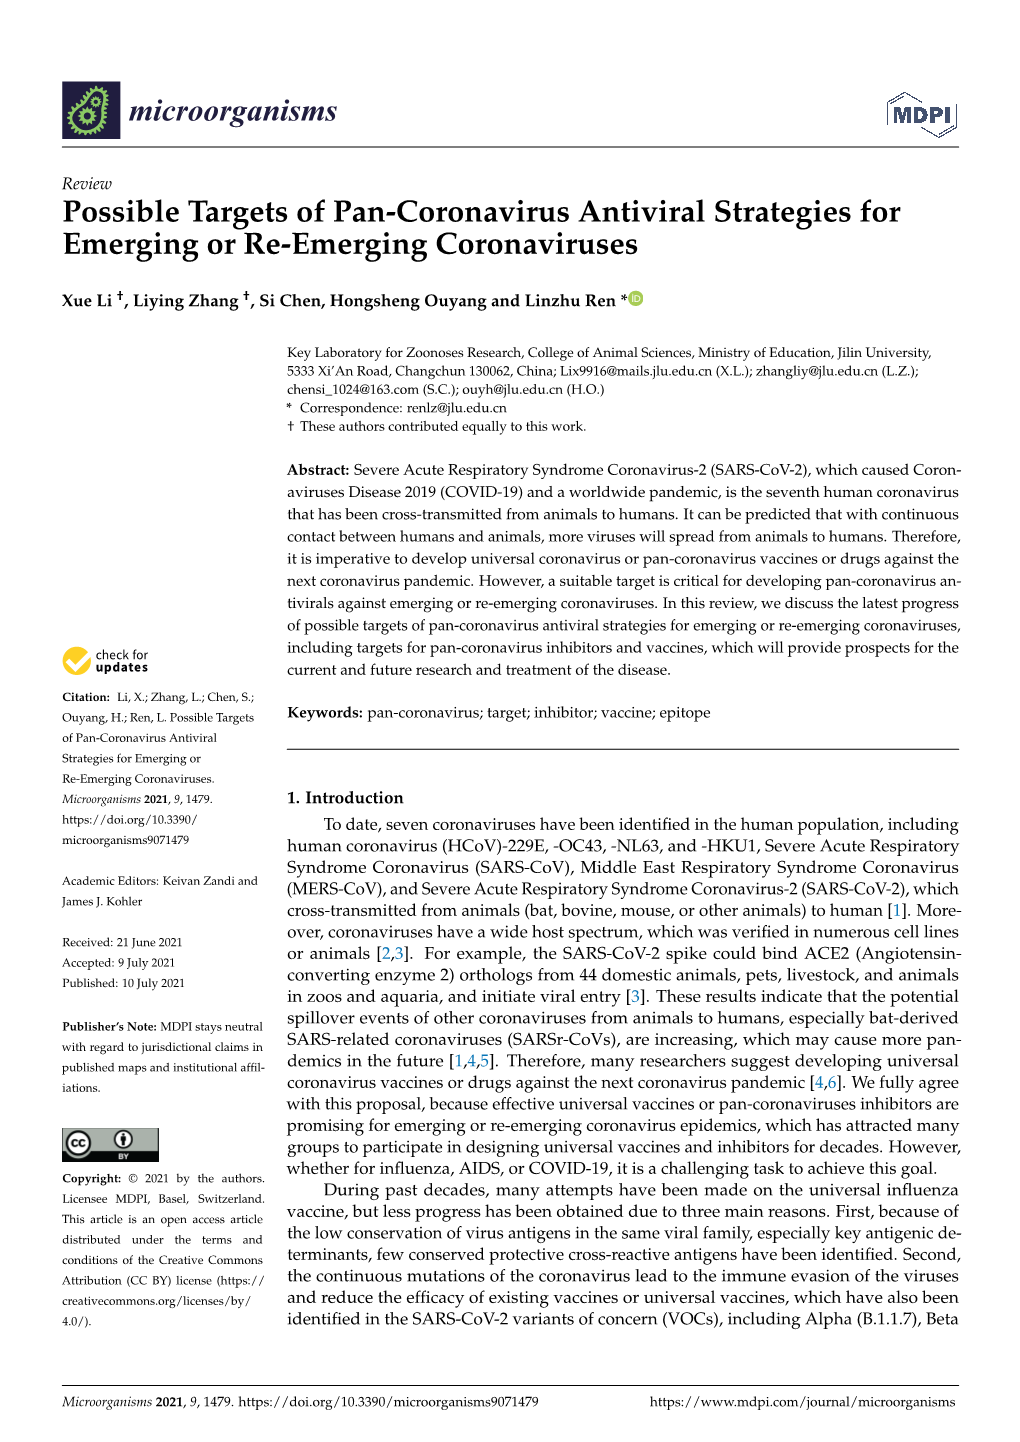 Possible Targets of Pan-Coronavirus Antiviral Strategies for Emerging Or Re-Emerging Coronaviruses